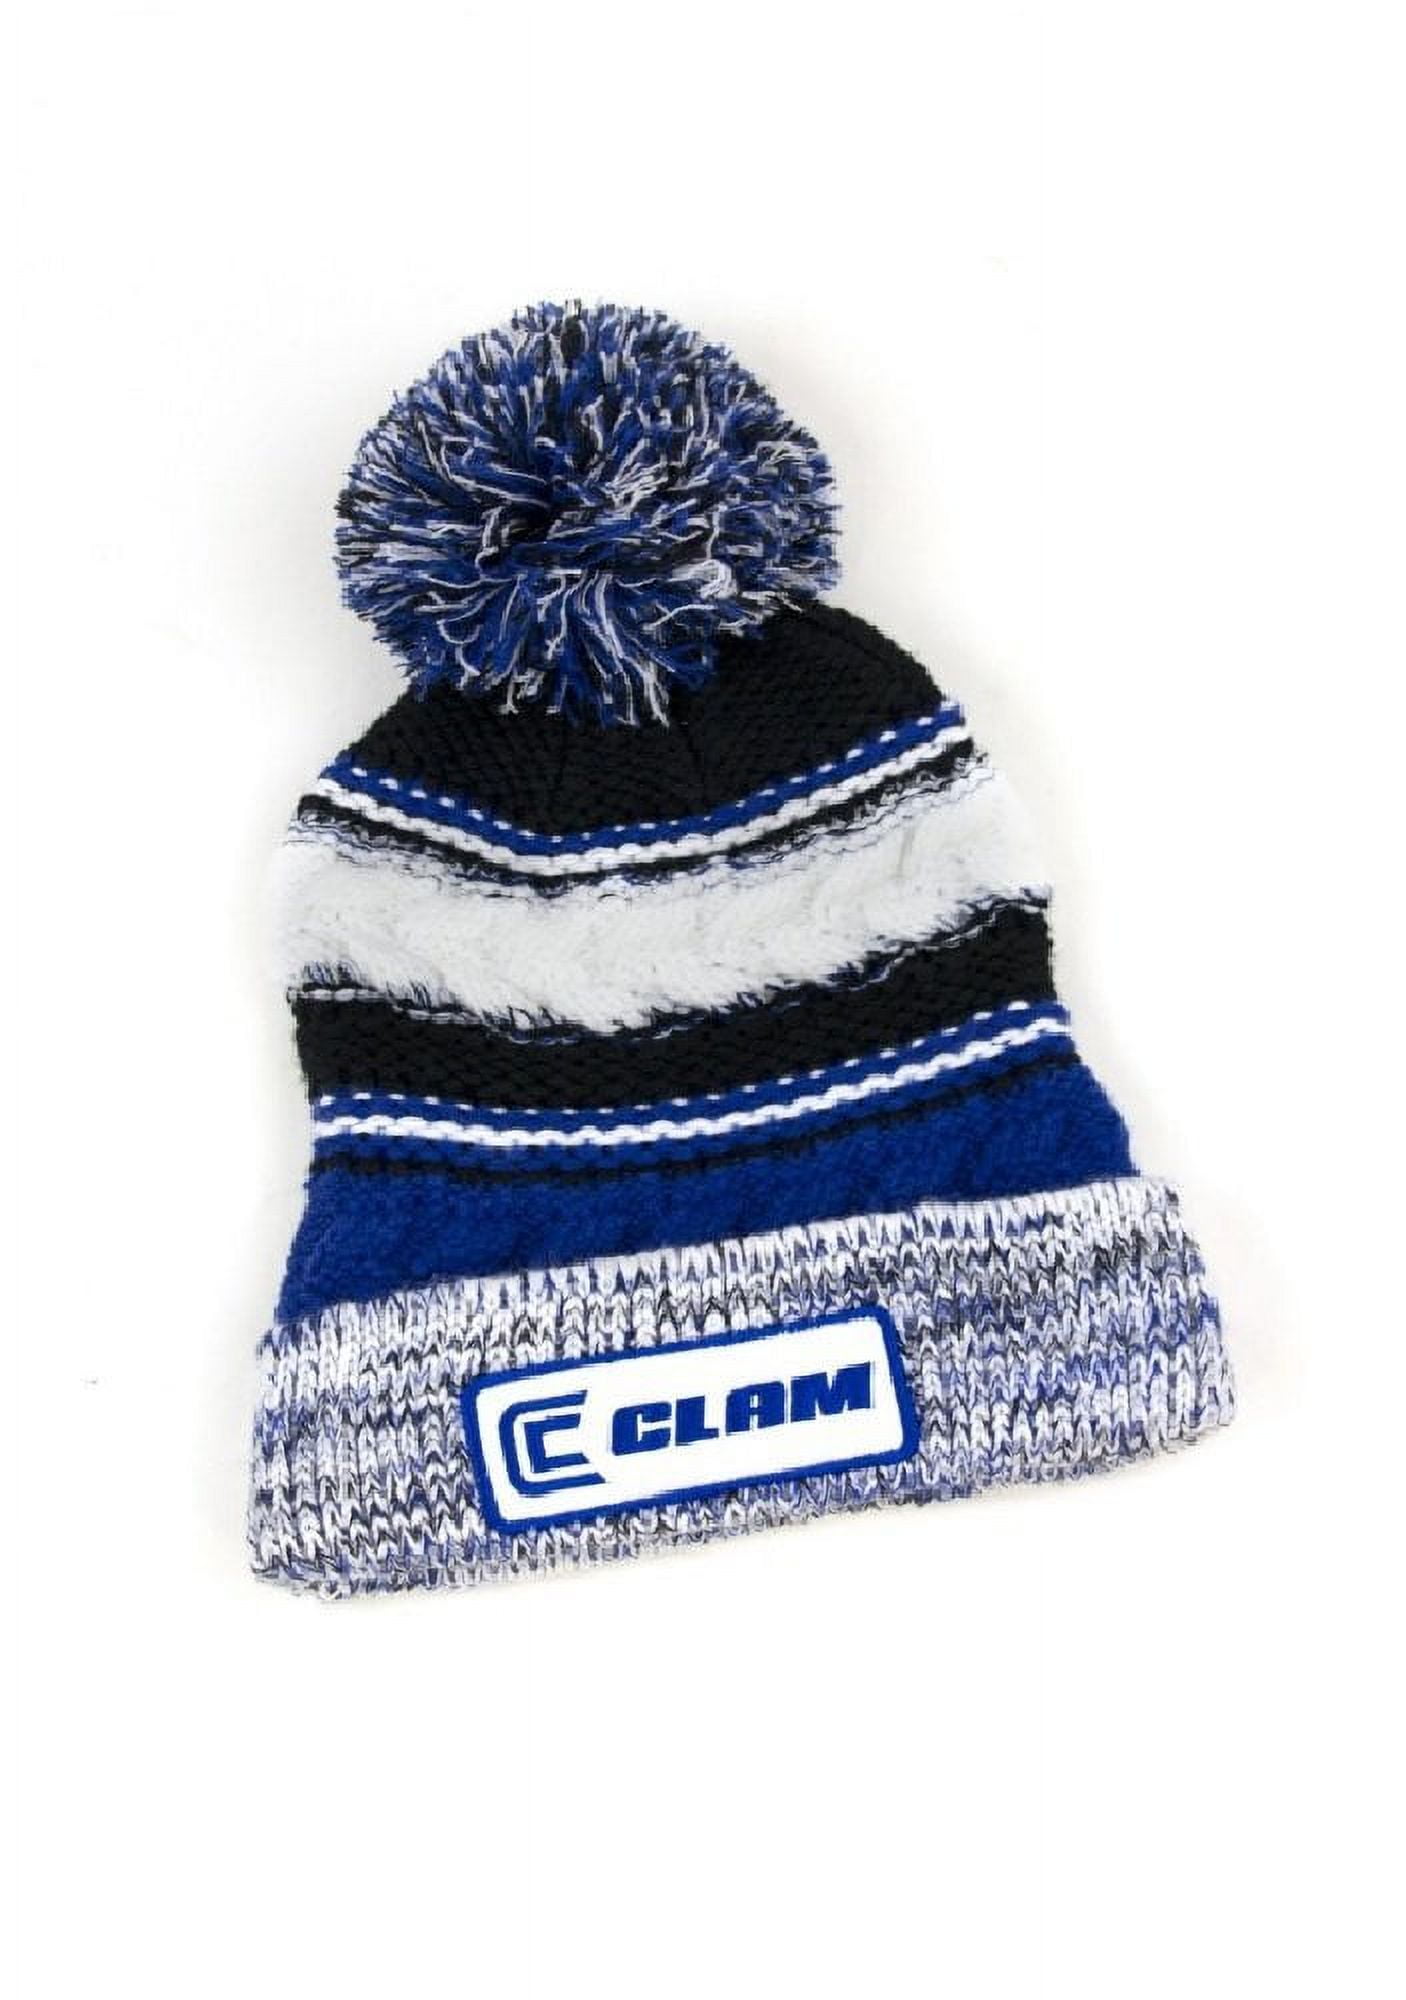 Clam IceArmor Small/Medium Adventure Hat 10674 - The Home Depot